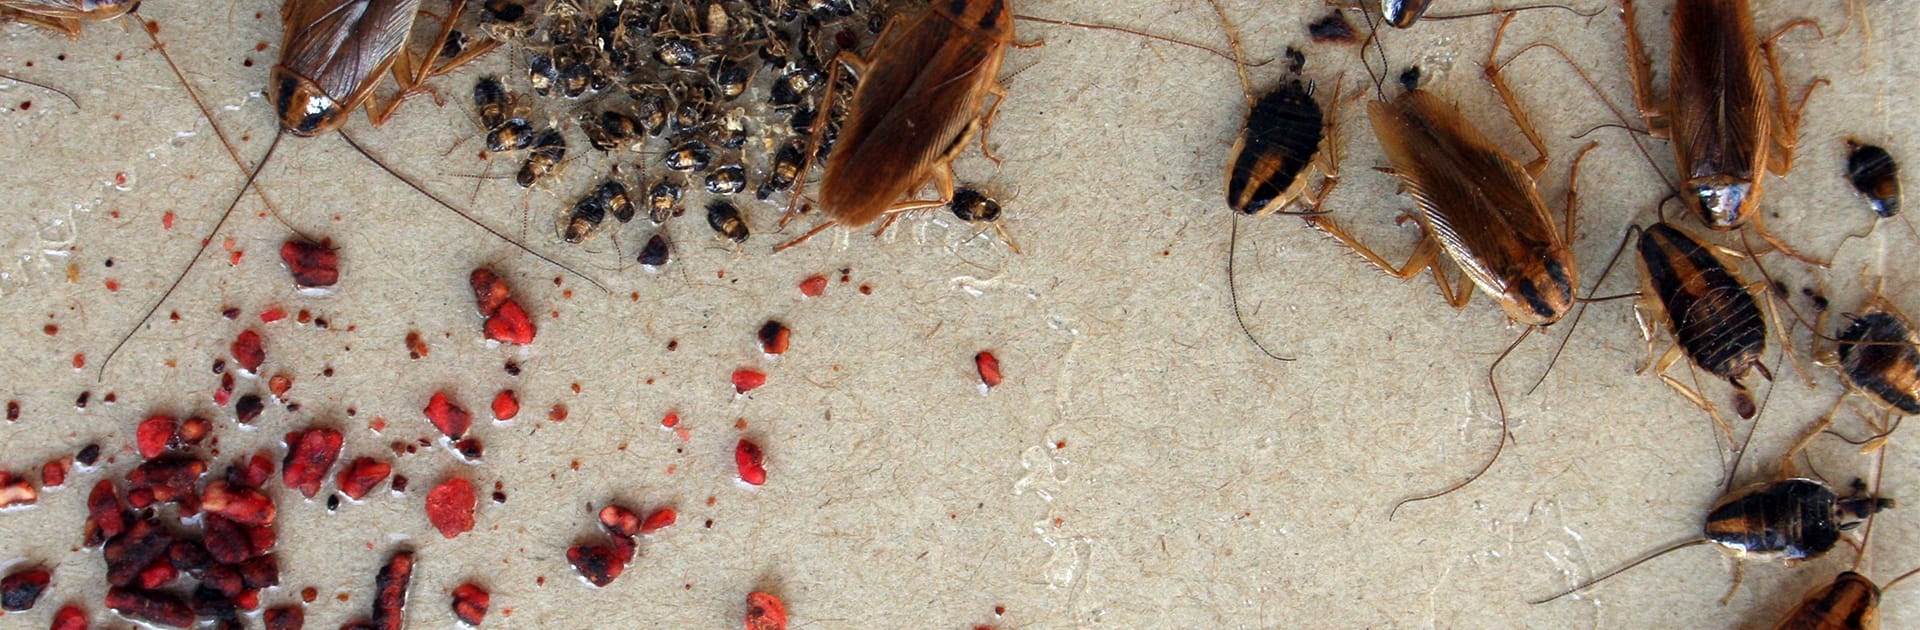 german cockroaches roaches rid texas